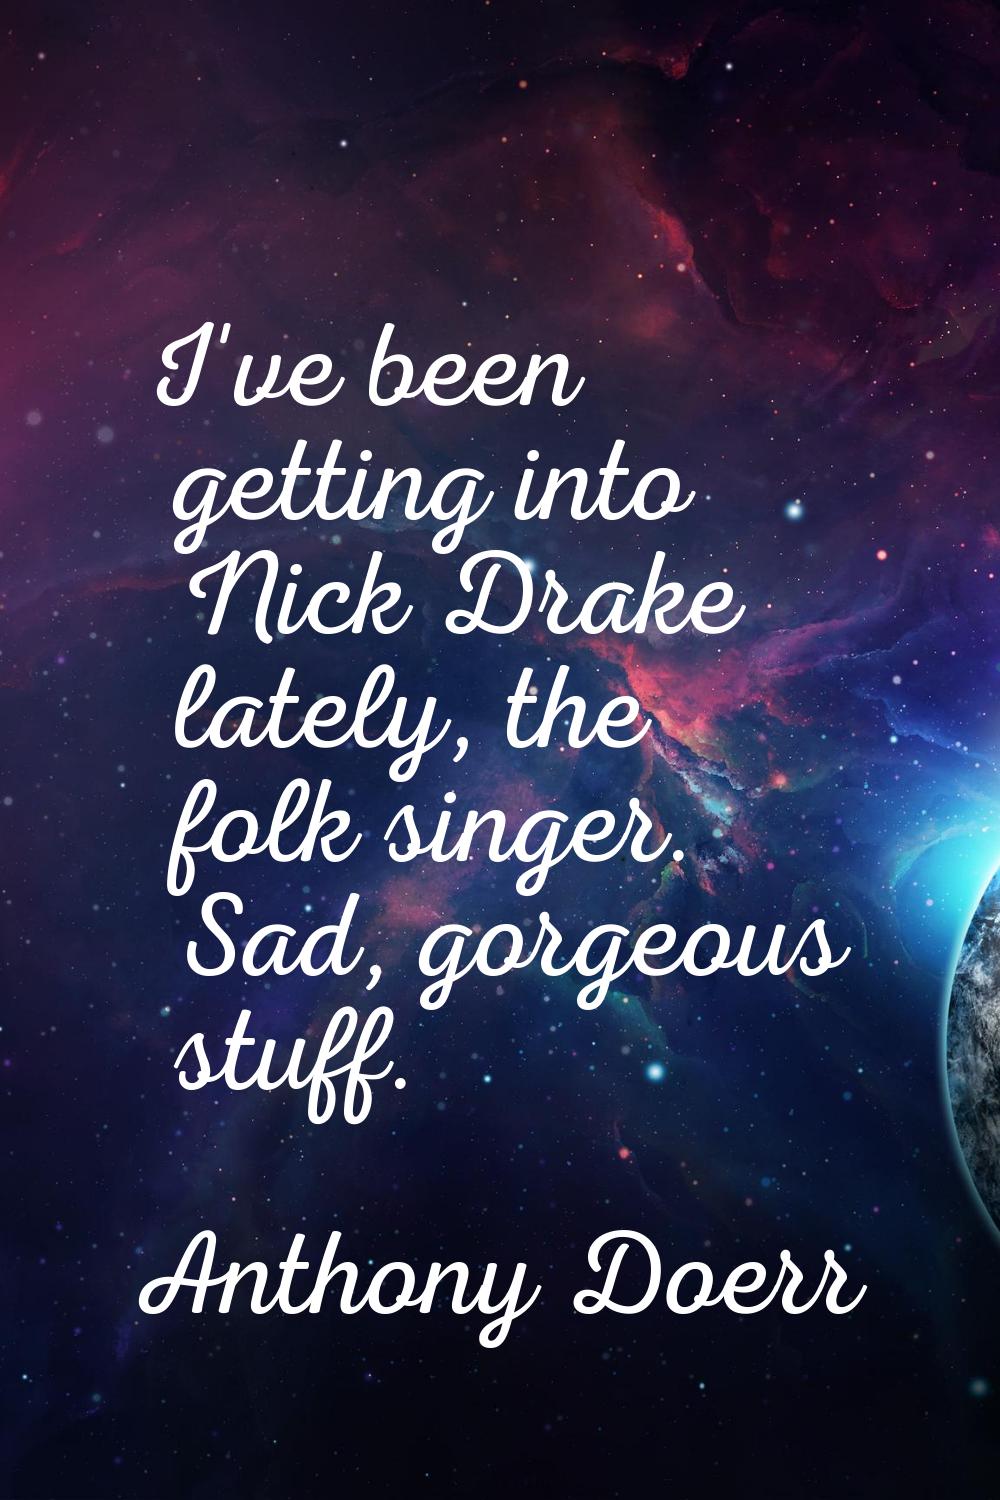 I've been getting into Nick Drake lately, the folk singer. Sad, gorgeous stuff.